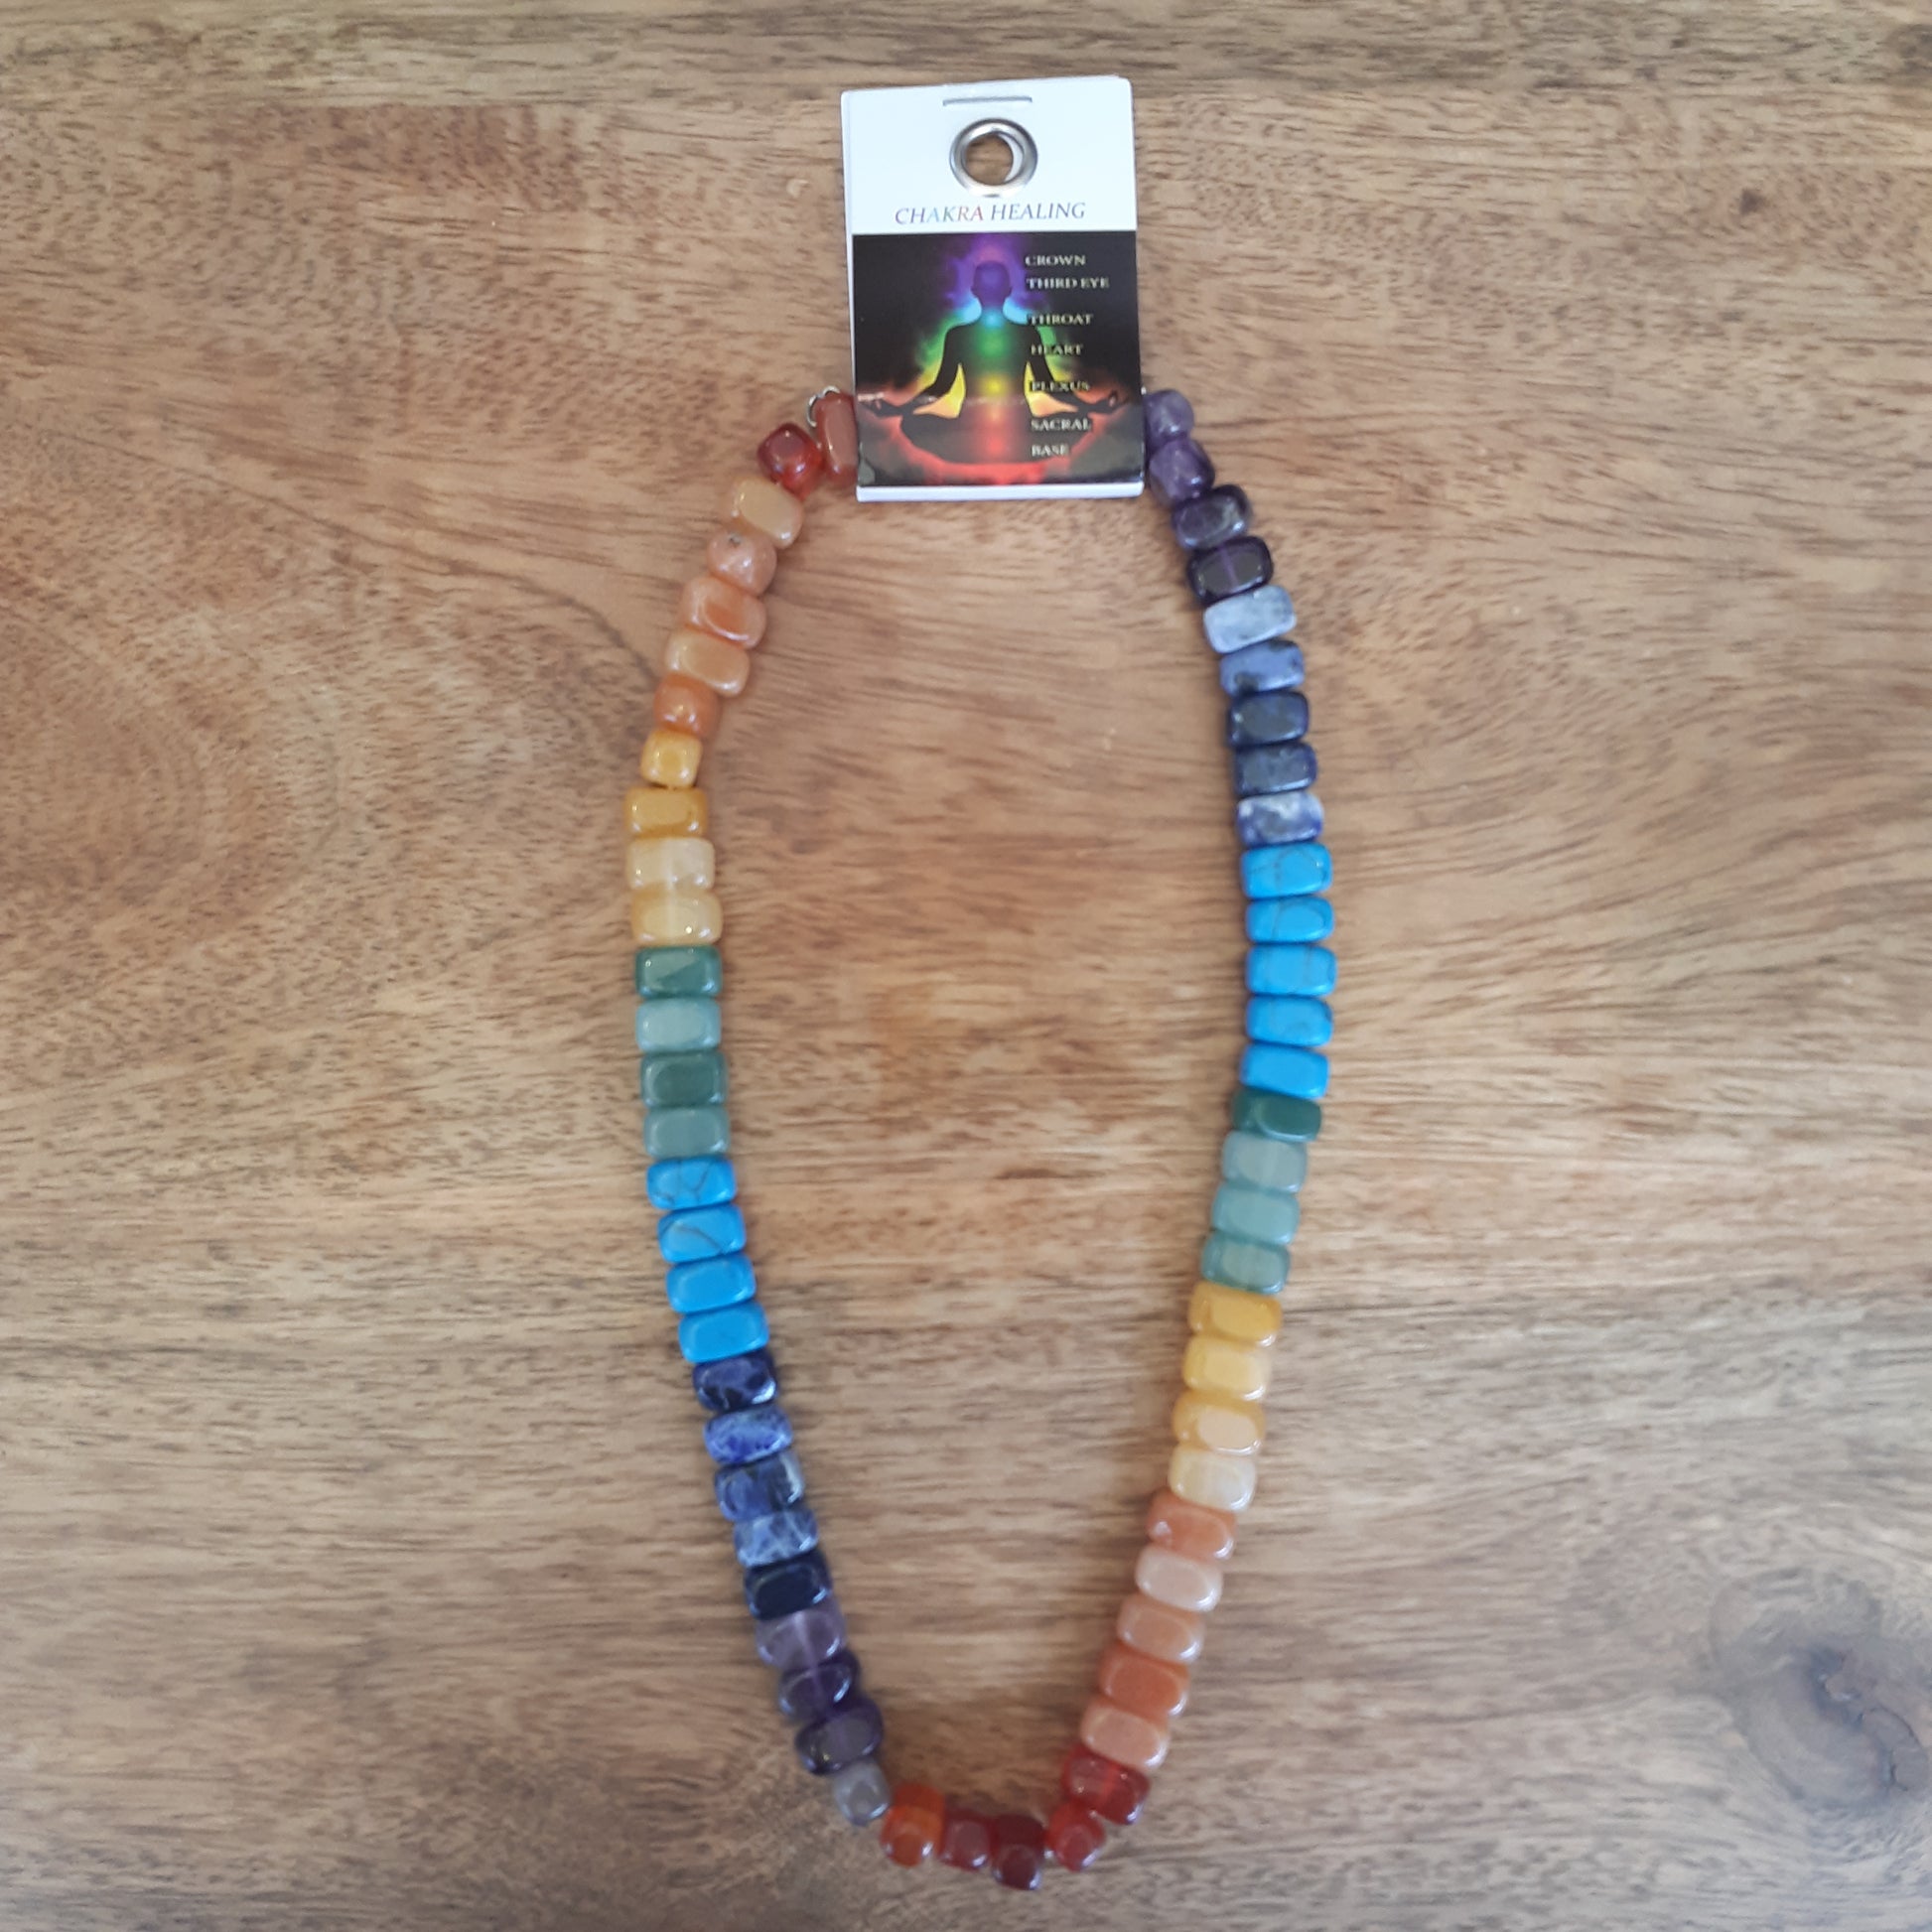 Chakra healing crystal necklace - Rivendell Shop